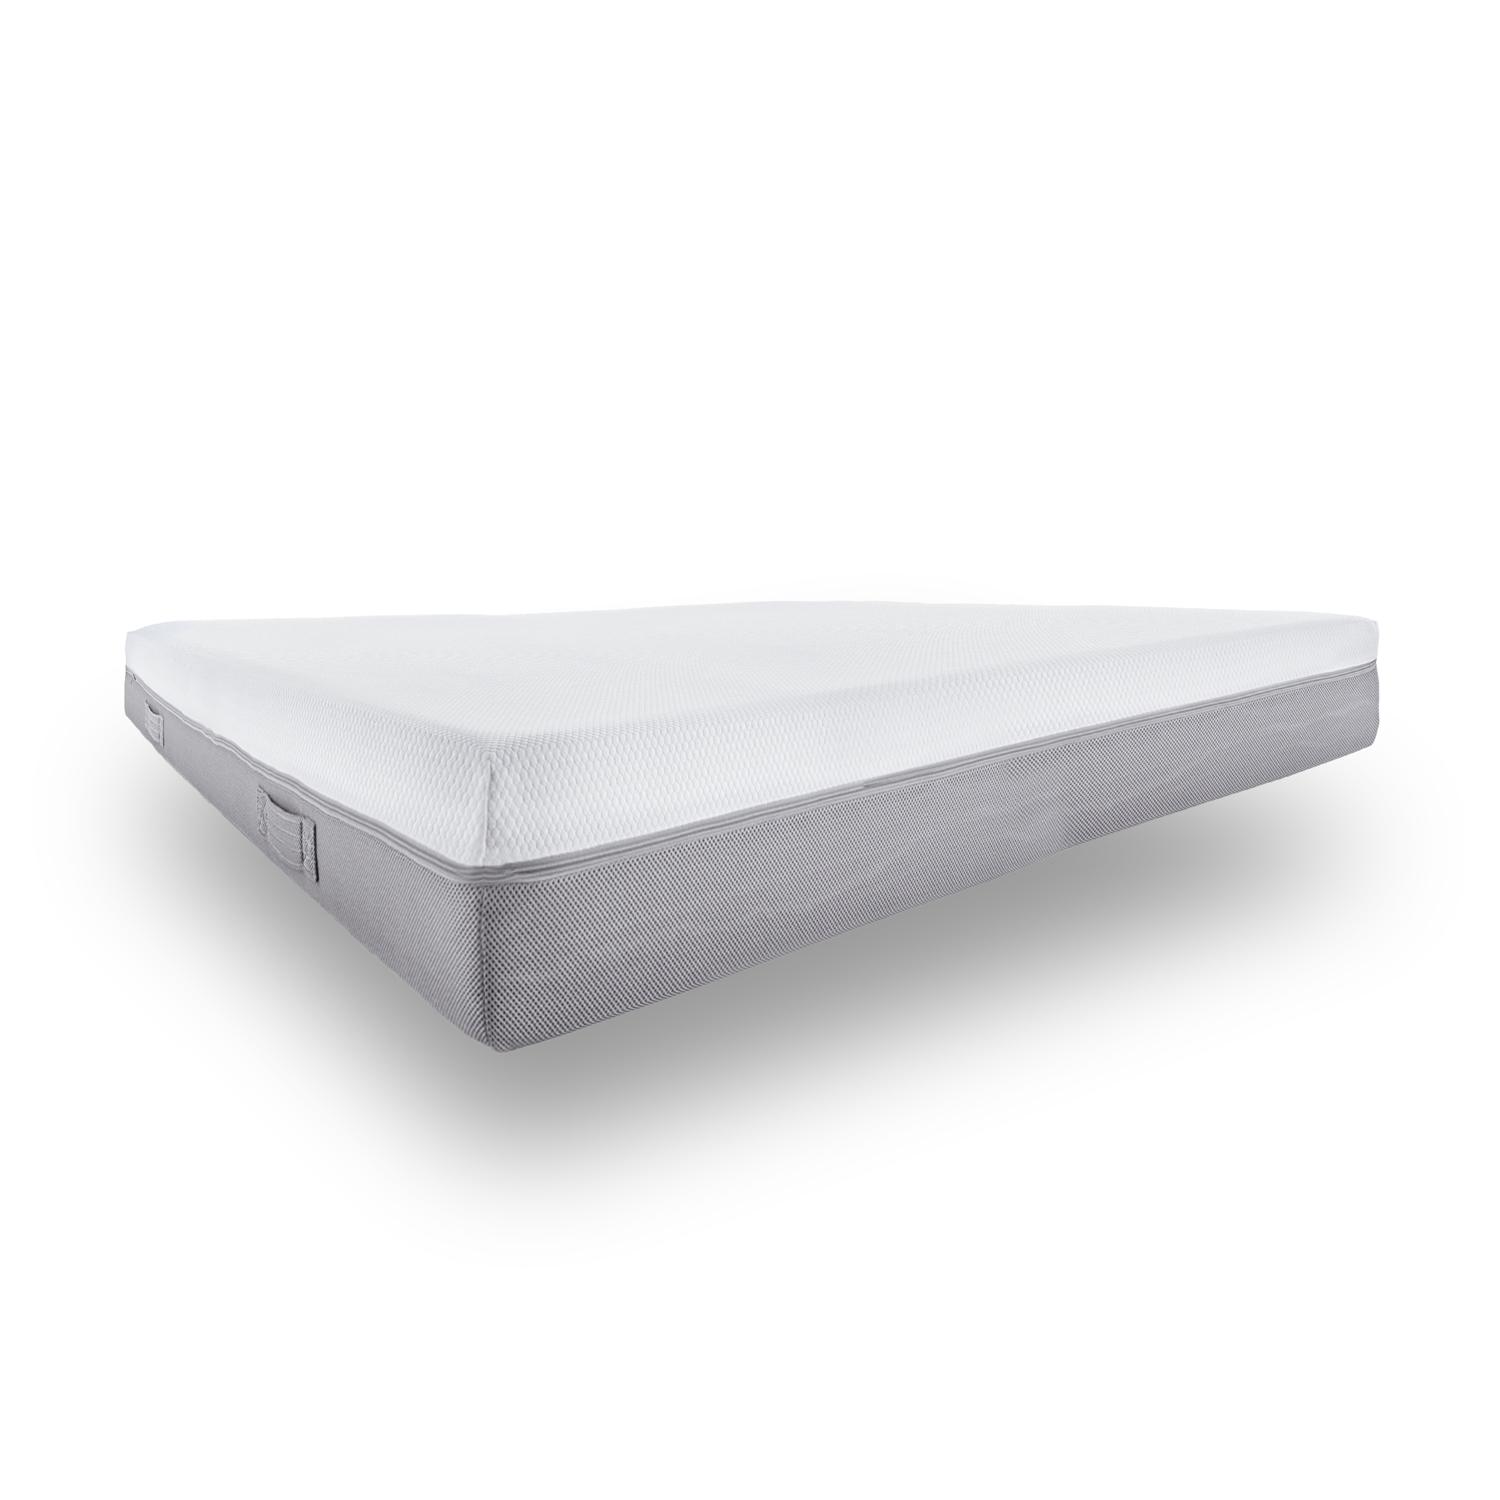 Sleezzz Premium viscoelastic mattress 120 x 200 cm, height 20 cm, firmness level H2/H3, with reversible handles